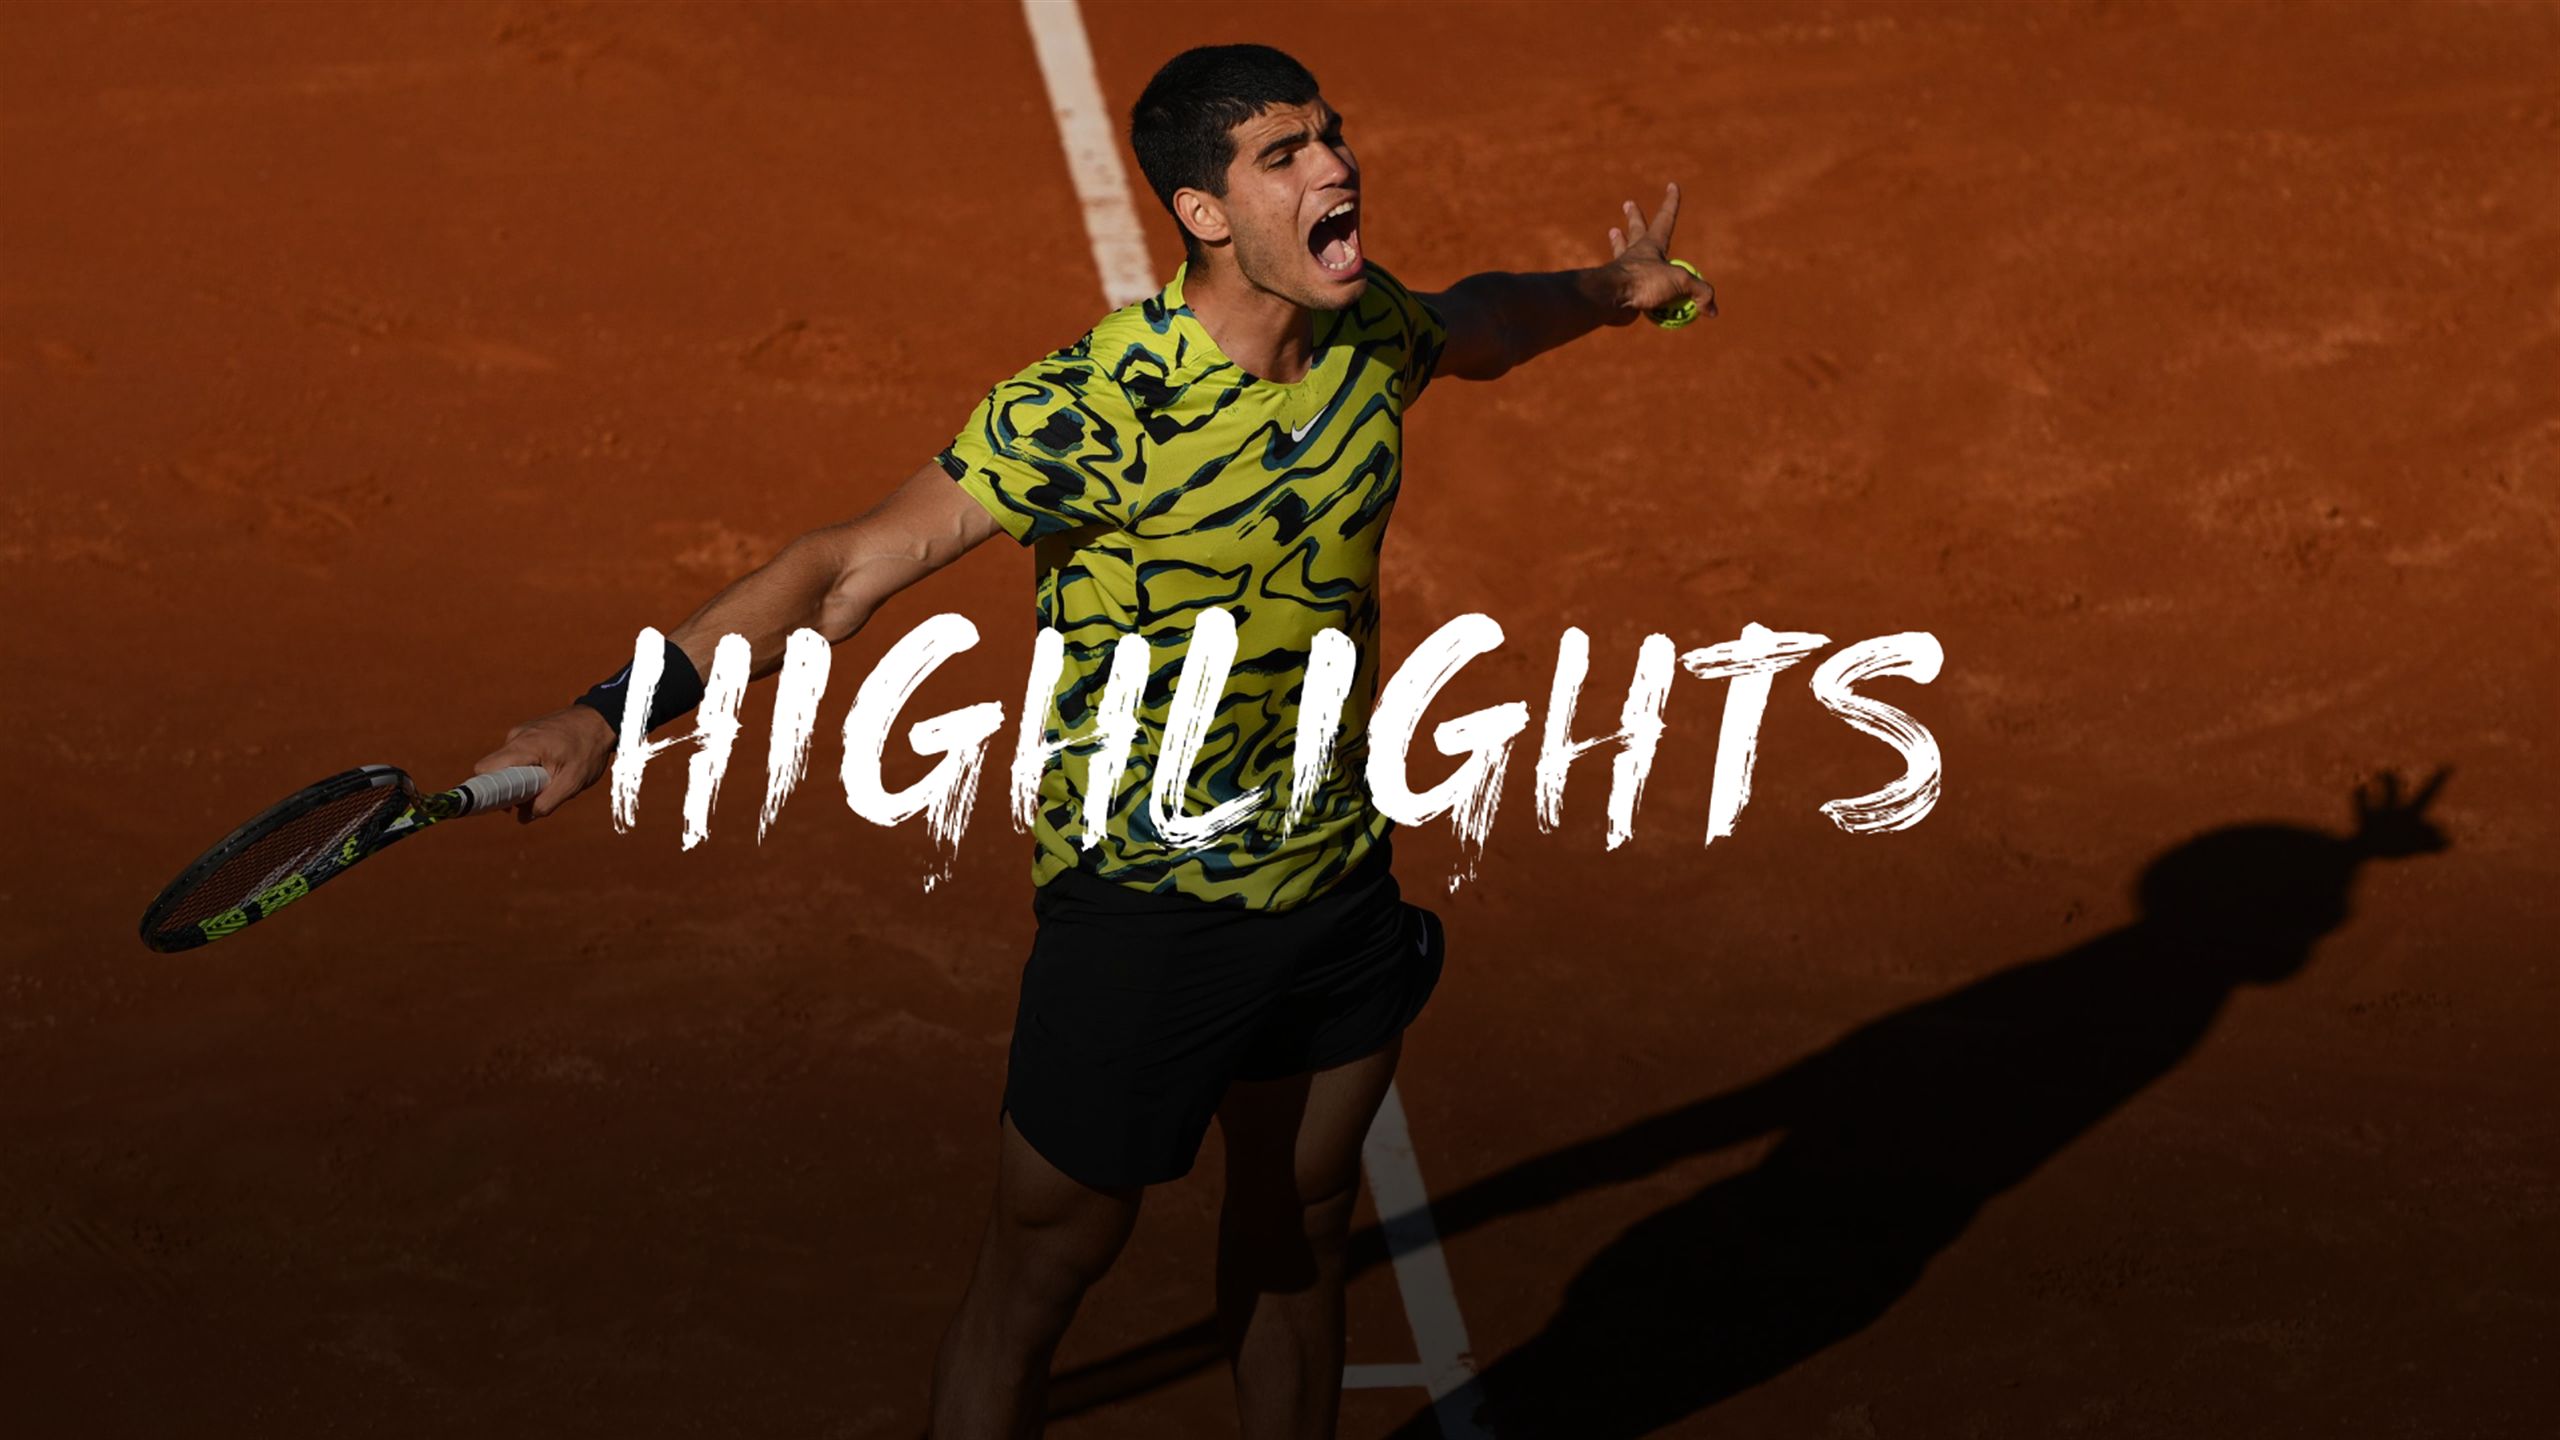 ATP Barcelona Carlos Alcaraz verteidigt Titel in Barcelona nach spektakulärem Finale mit Tsitsipas - Tennis Video